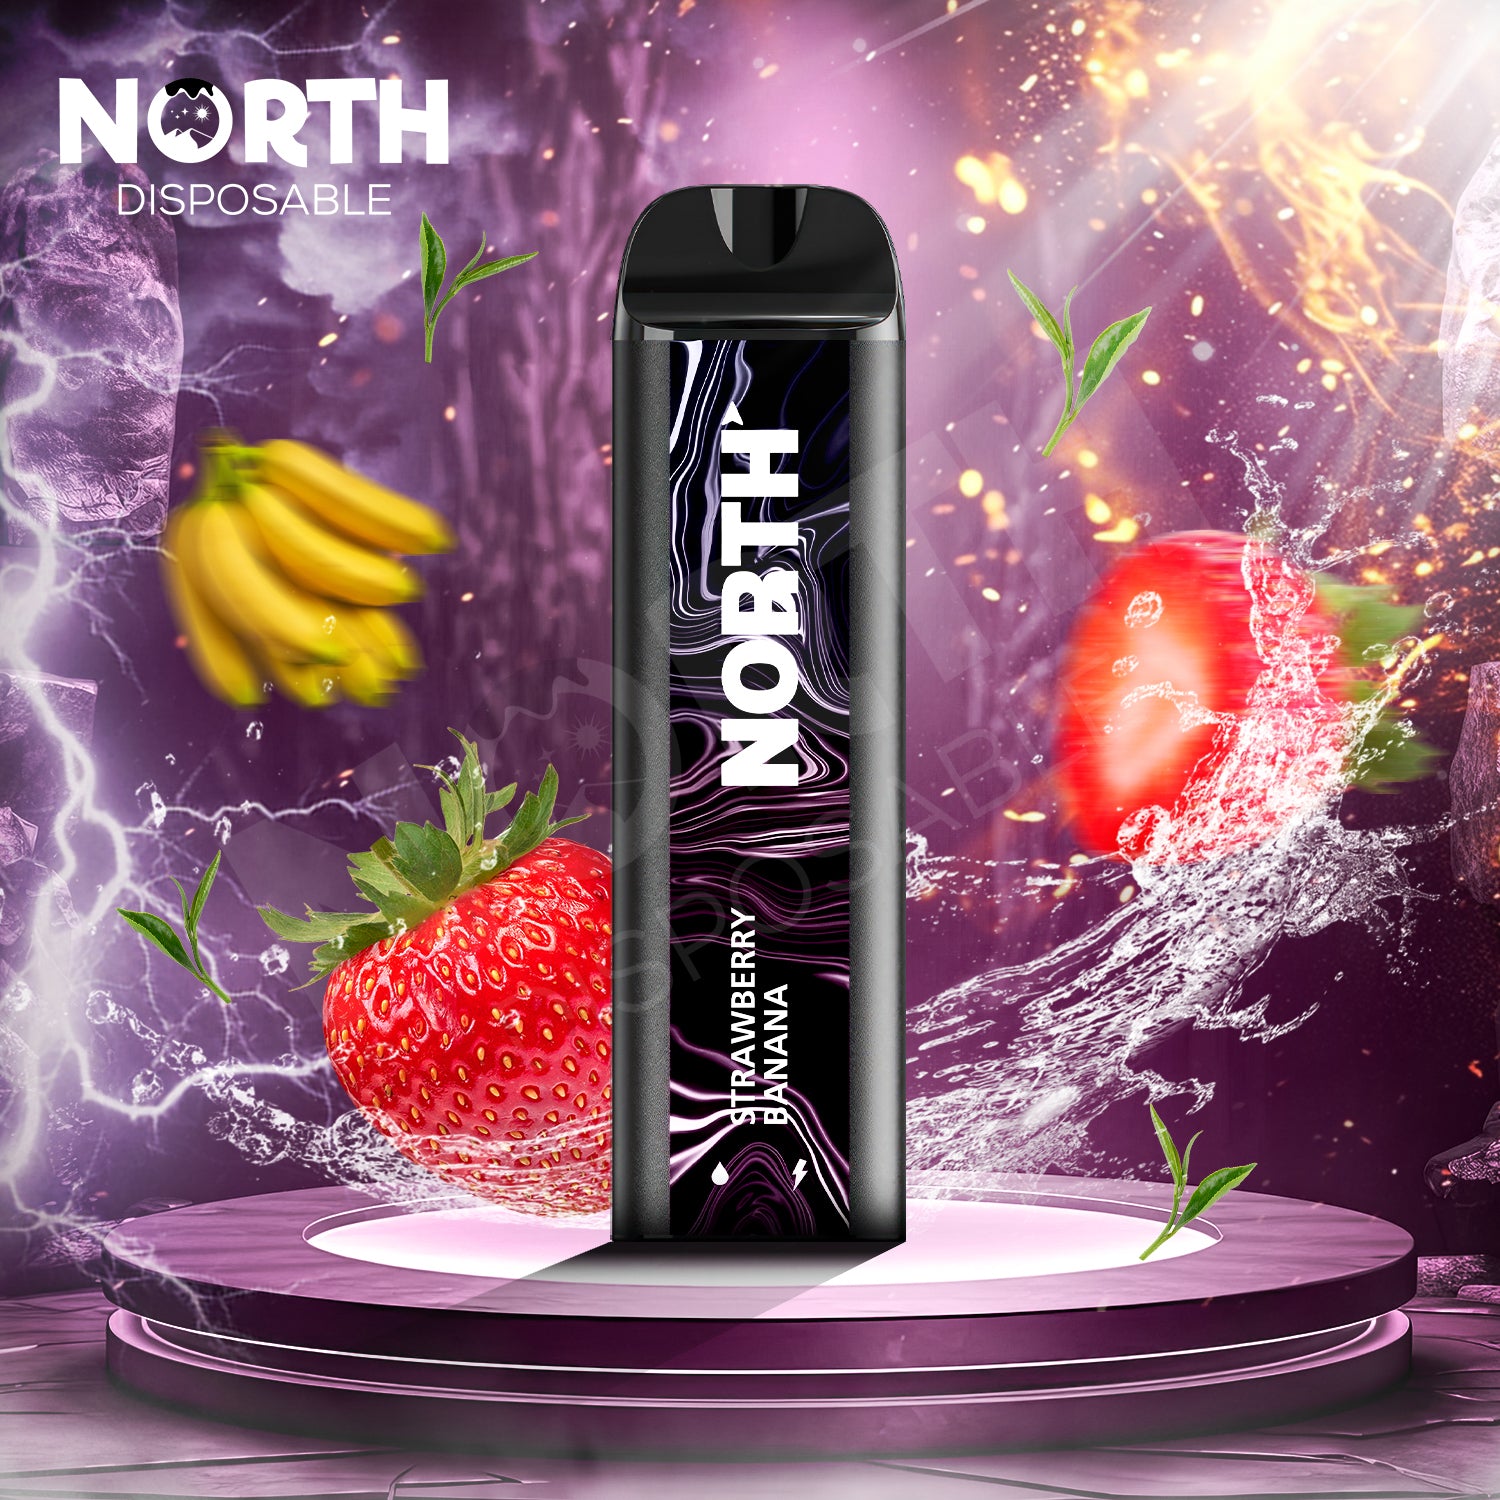 North 5000 Disposable 3% - Strawberry Banana